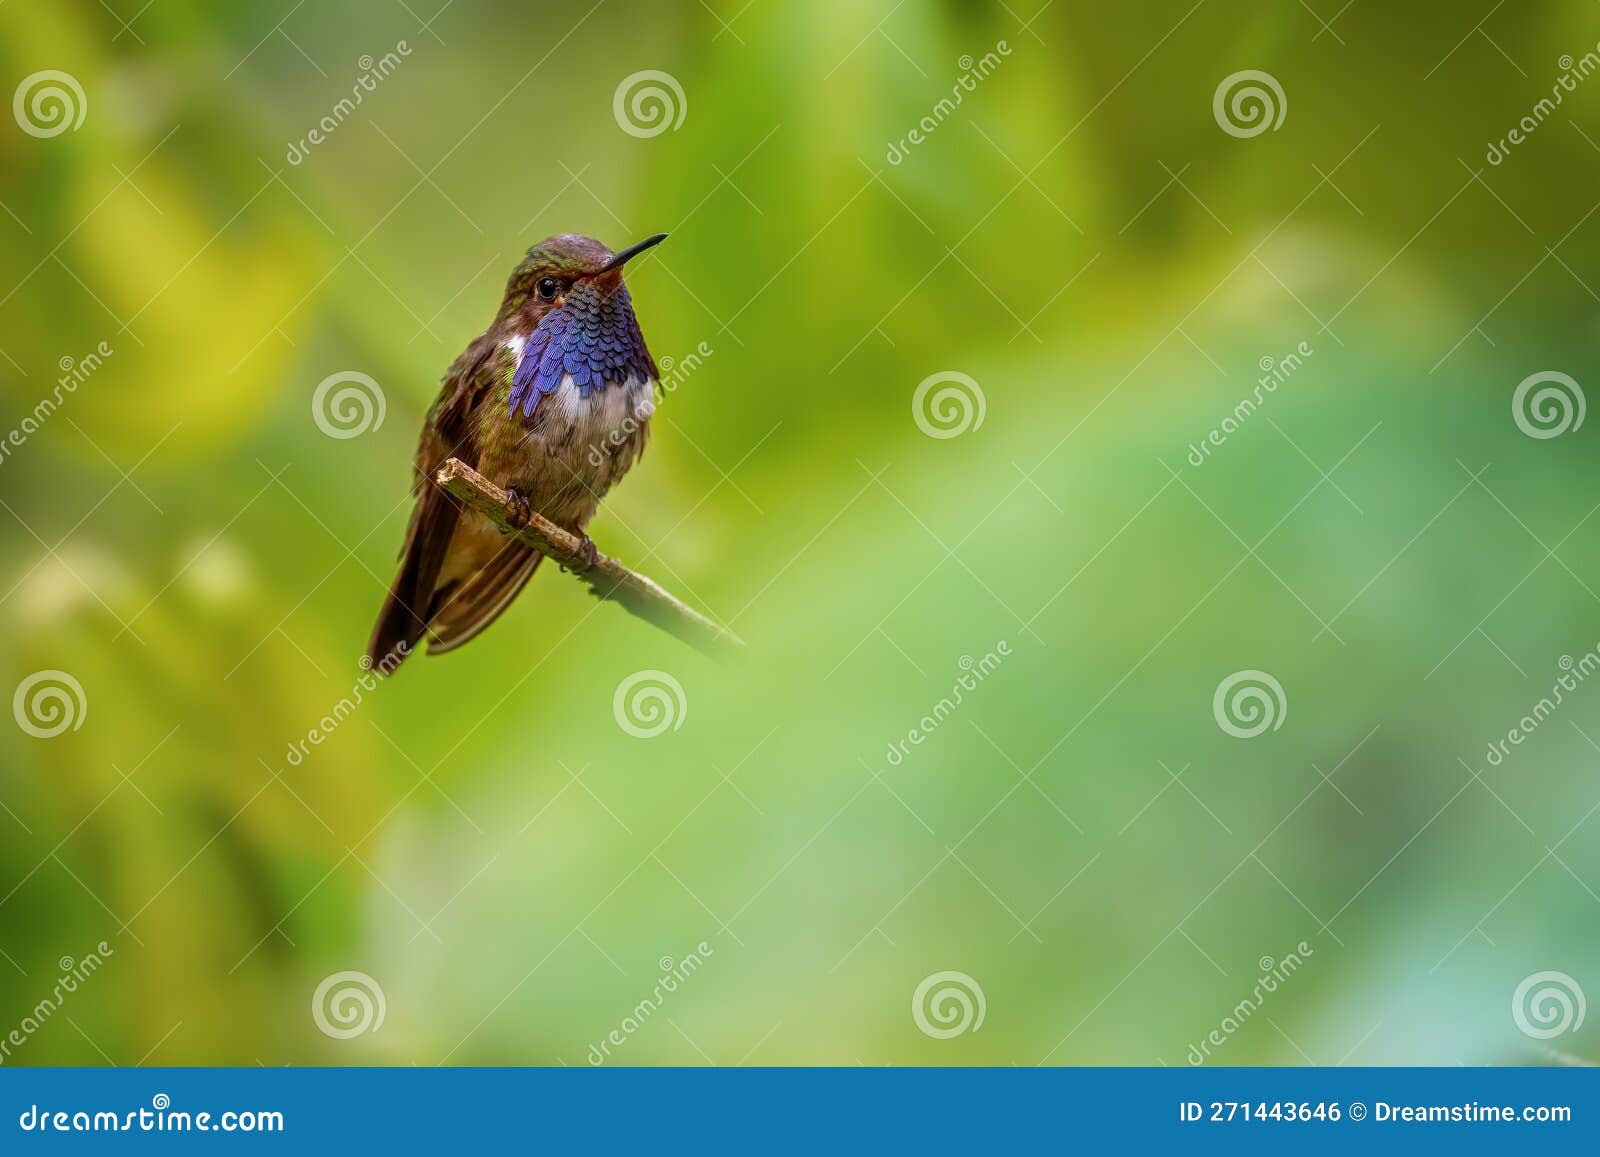 volcano hummingbird - selasphorus flammula